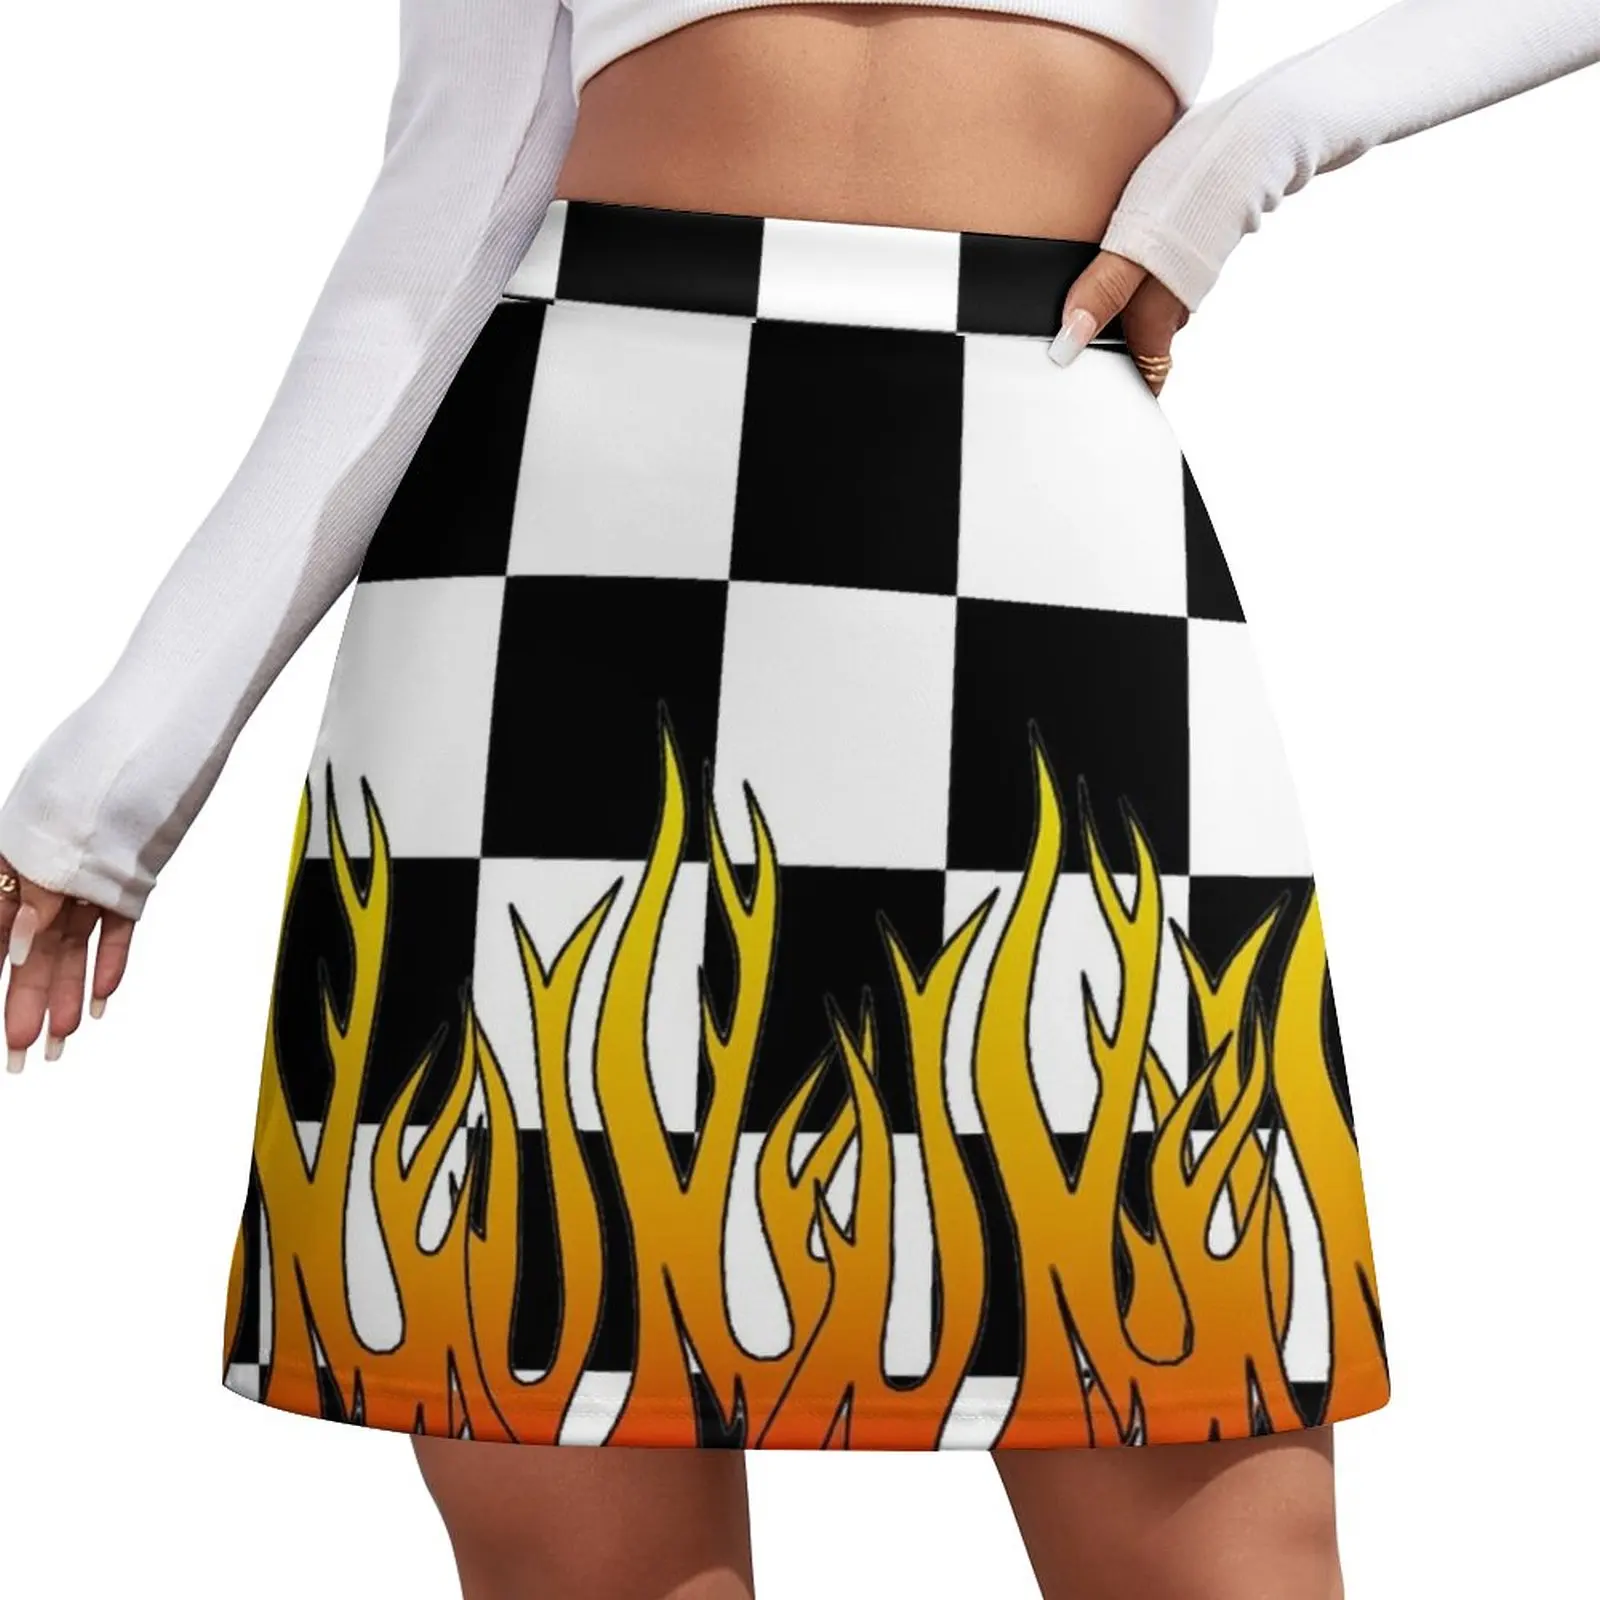 

Checkered Racing Flames Mini Skirt Miniskirt School uniform Woman clothing